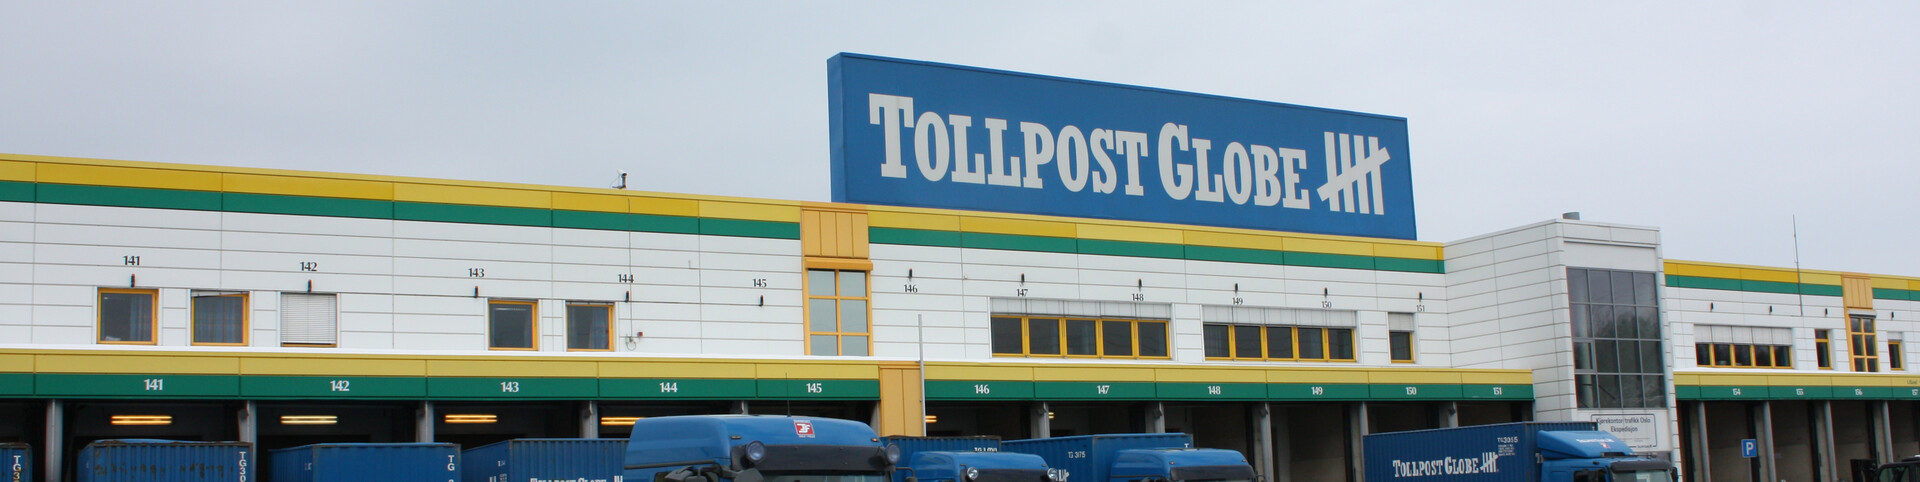 tollpost_globe-hero-banner-logistics-centre